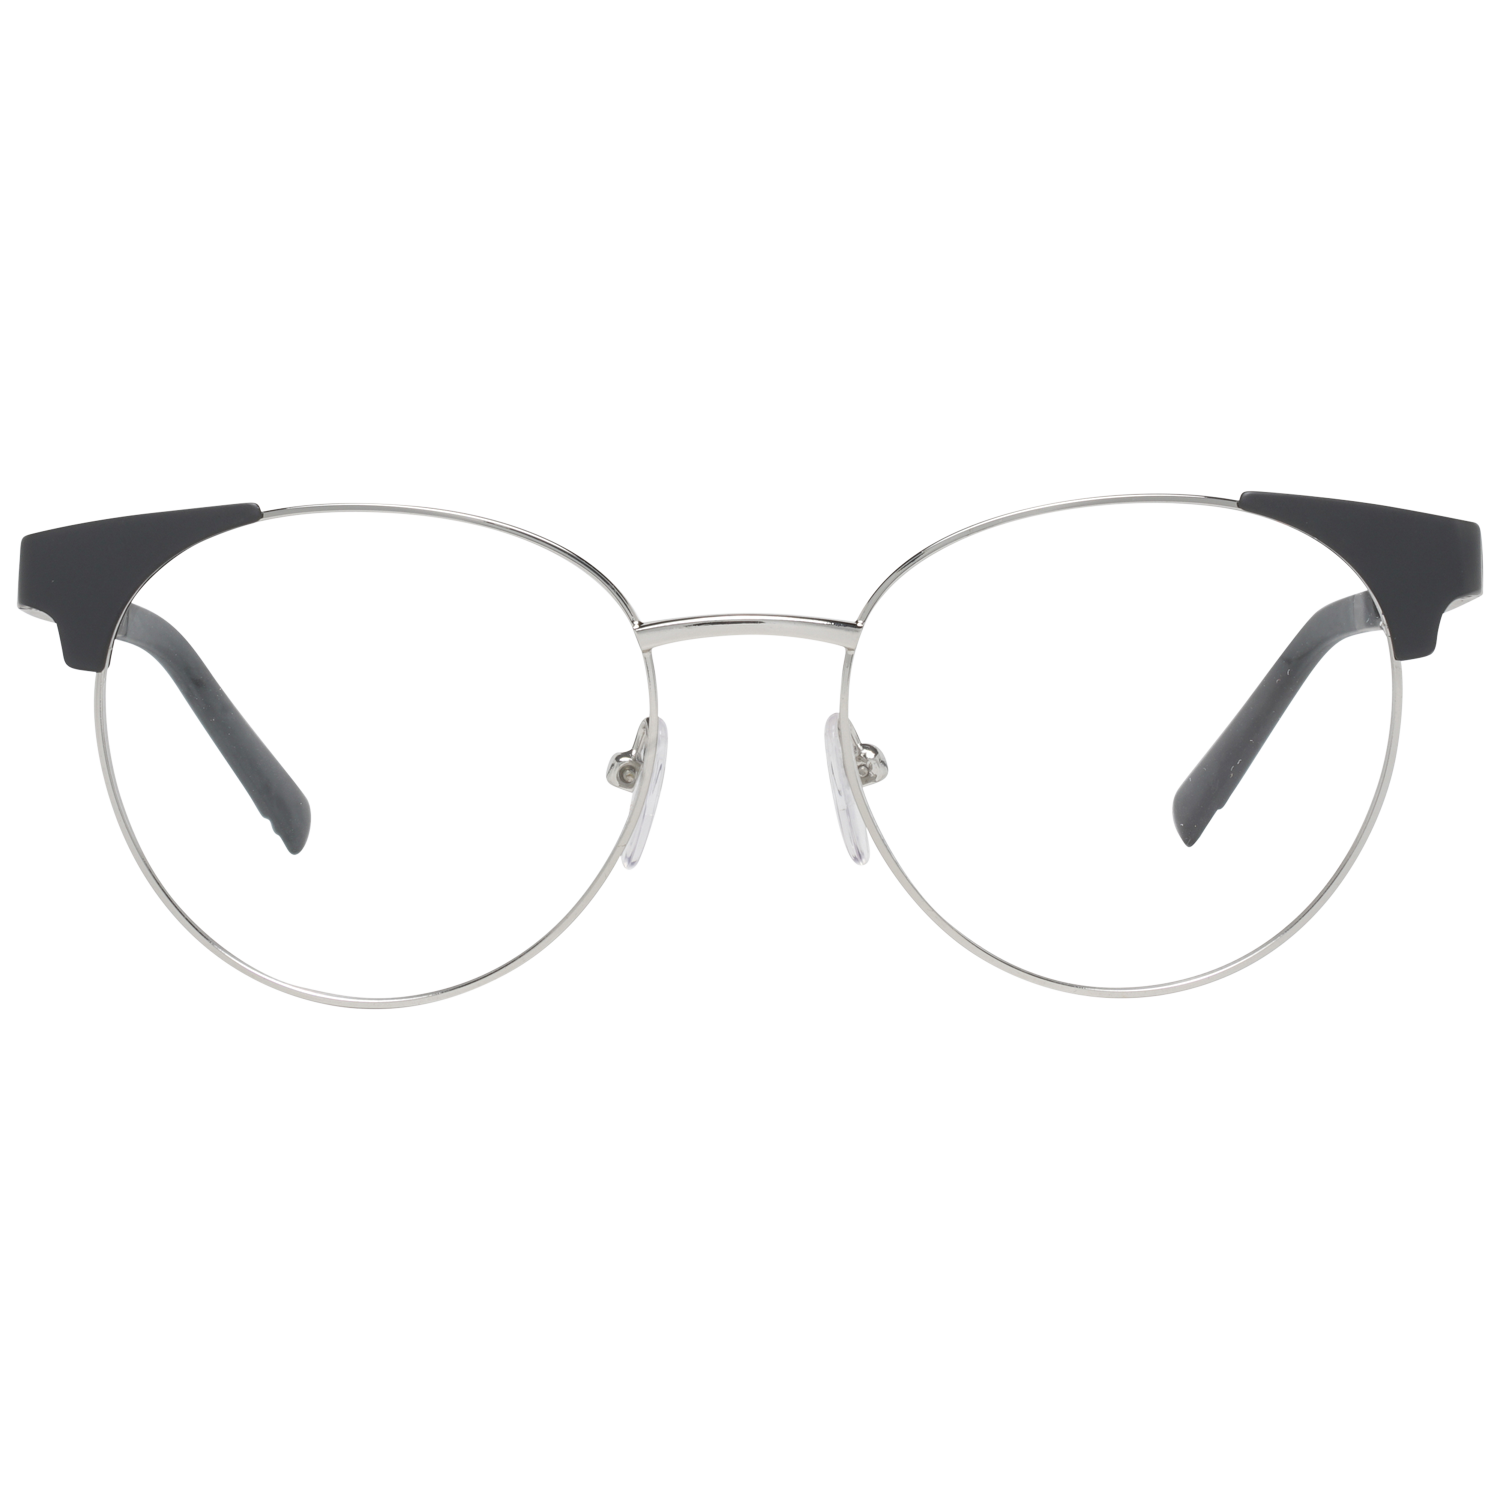 Sting Frames Sting Optical Frame VST233 0579 52 Eyeglasses Eyewear UK USA Australia 